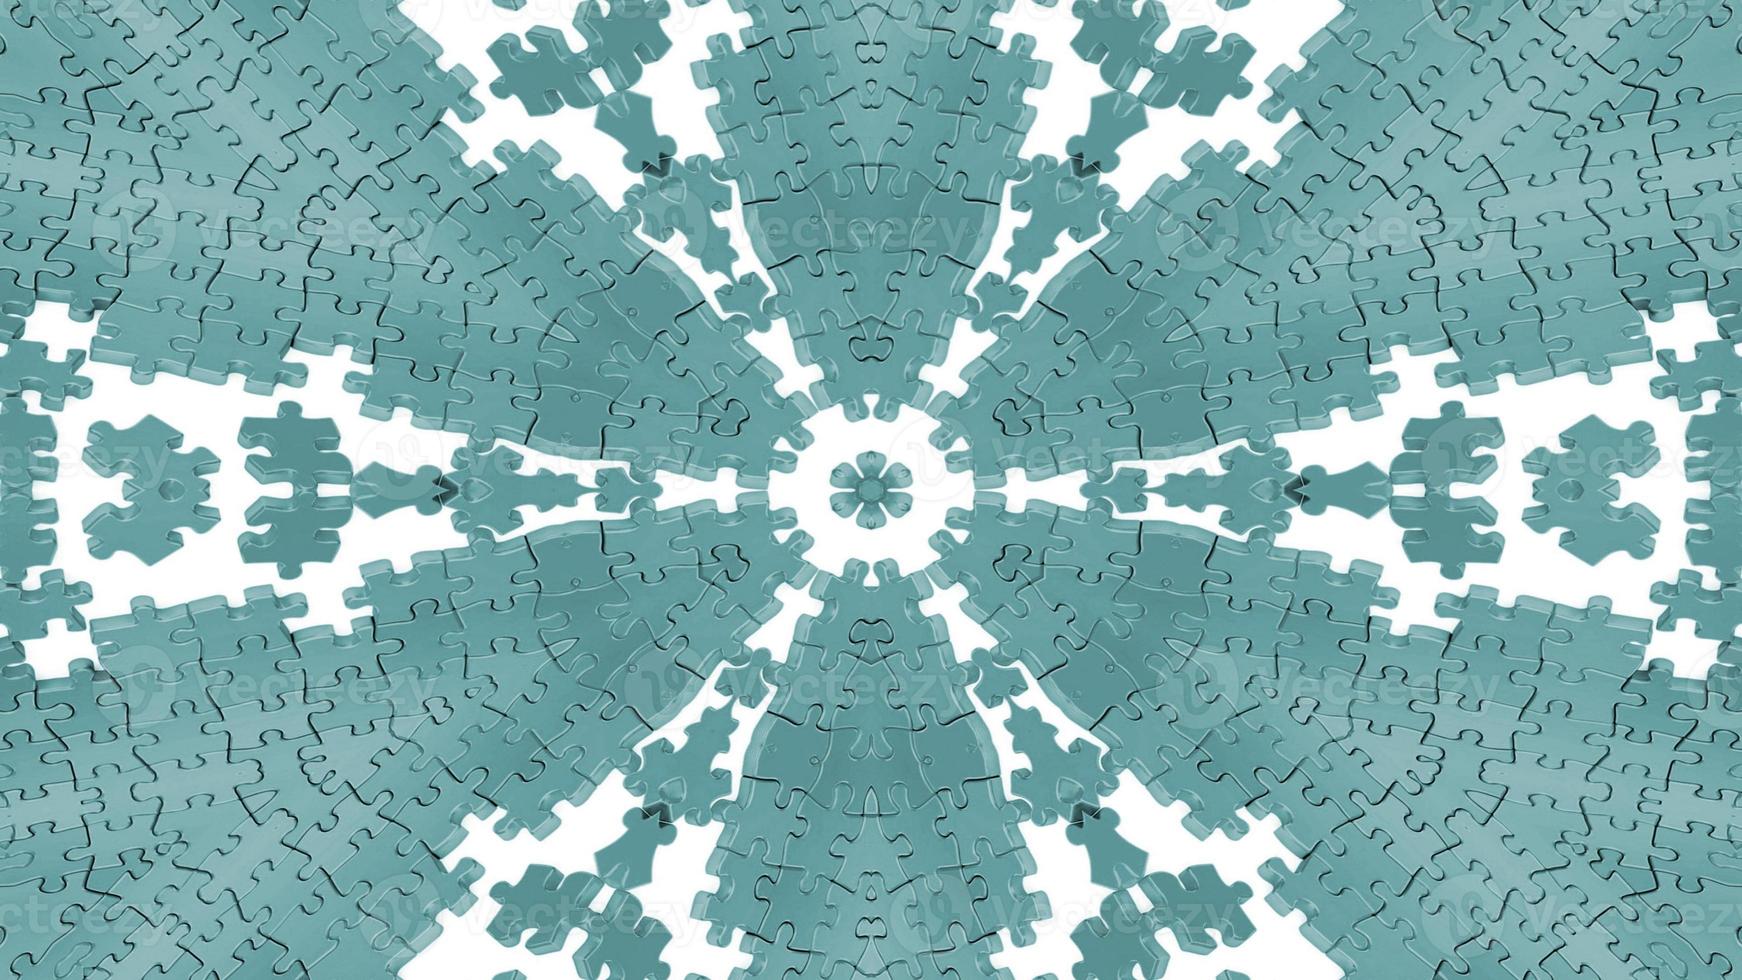 Abstract Puzzles Kaleidoscope photo